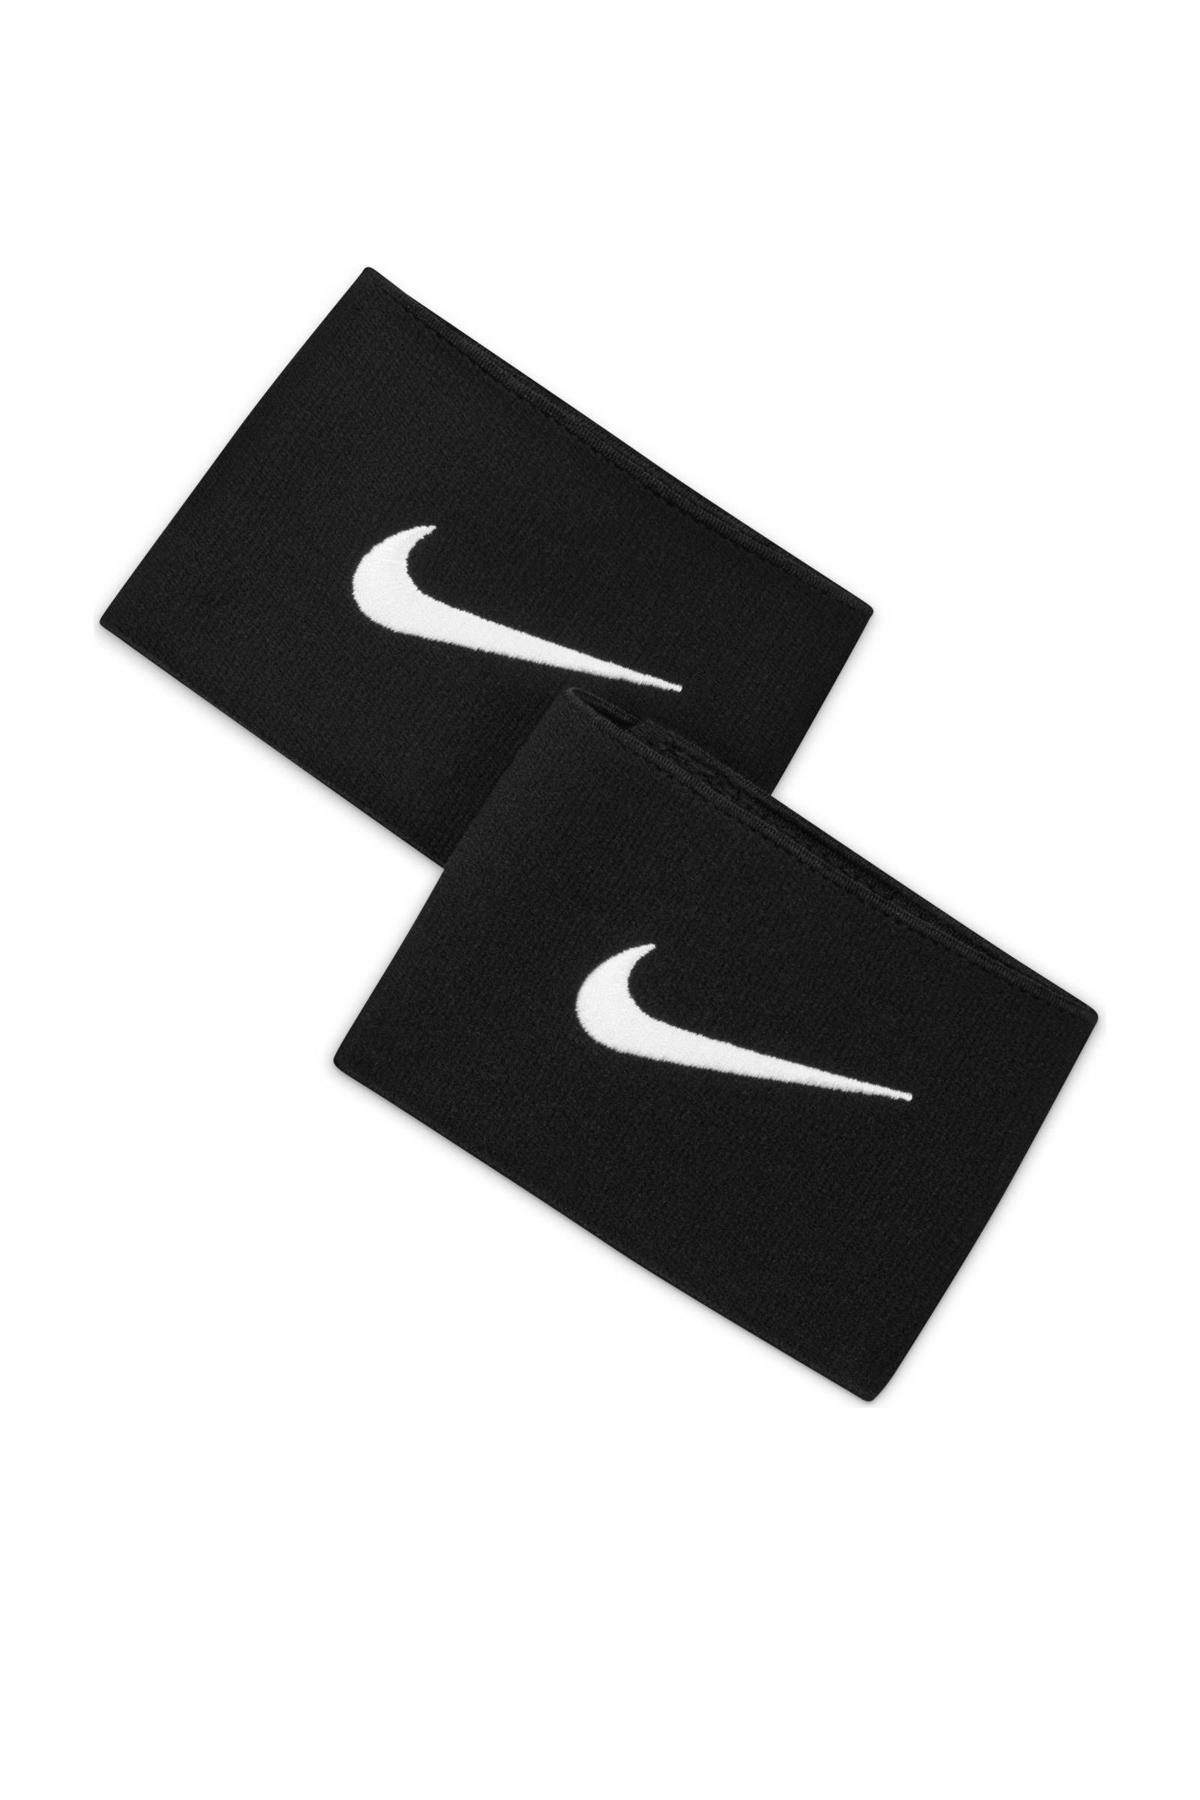 Nike scheenbeschermer ophouders Stay II zwart | wehkamp